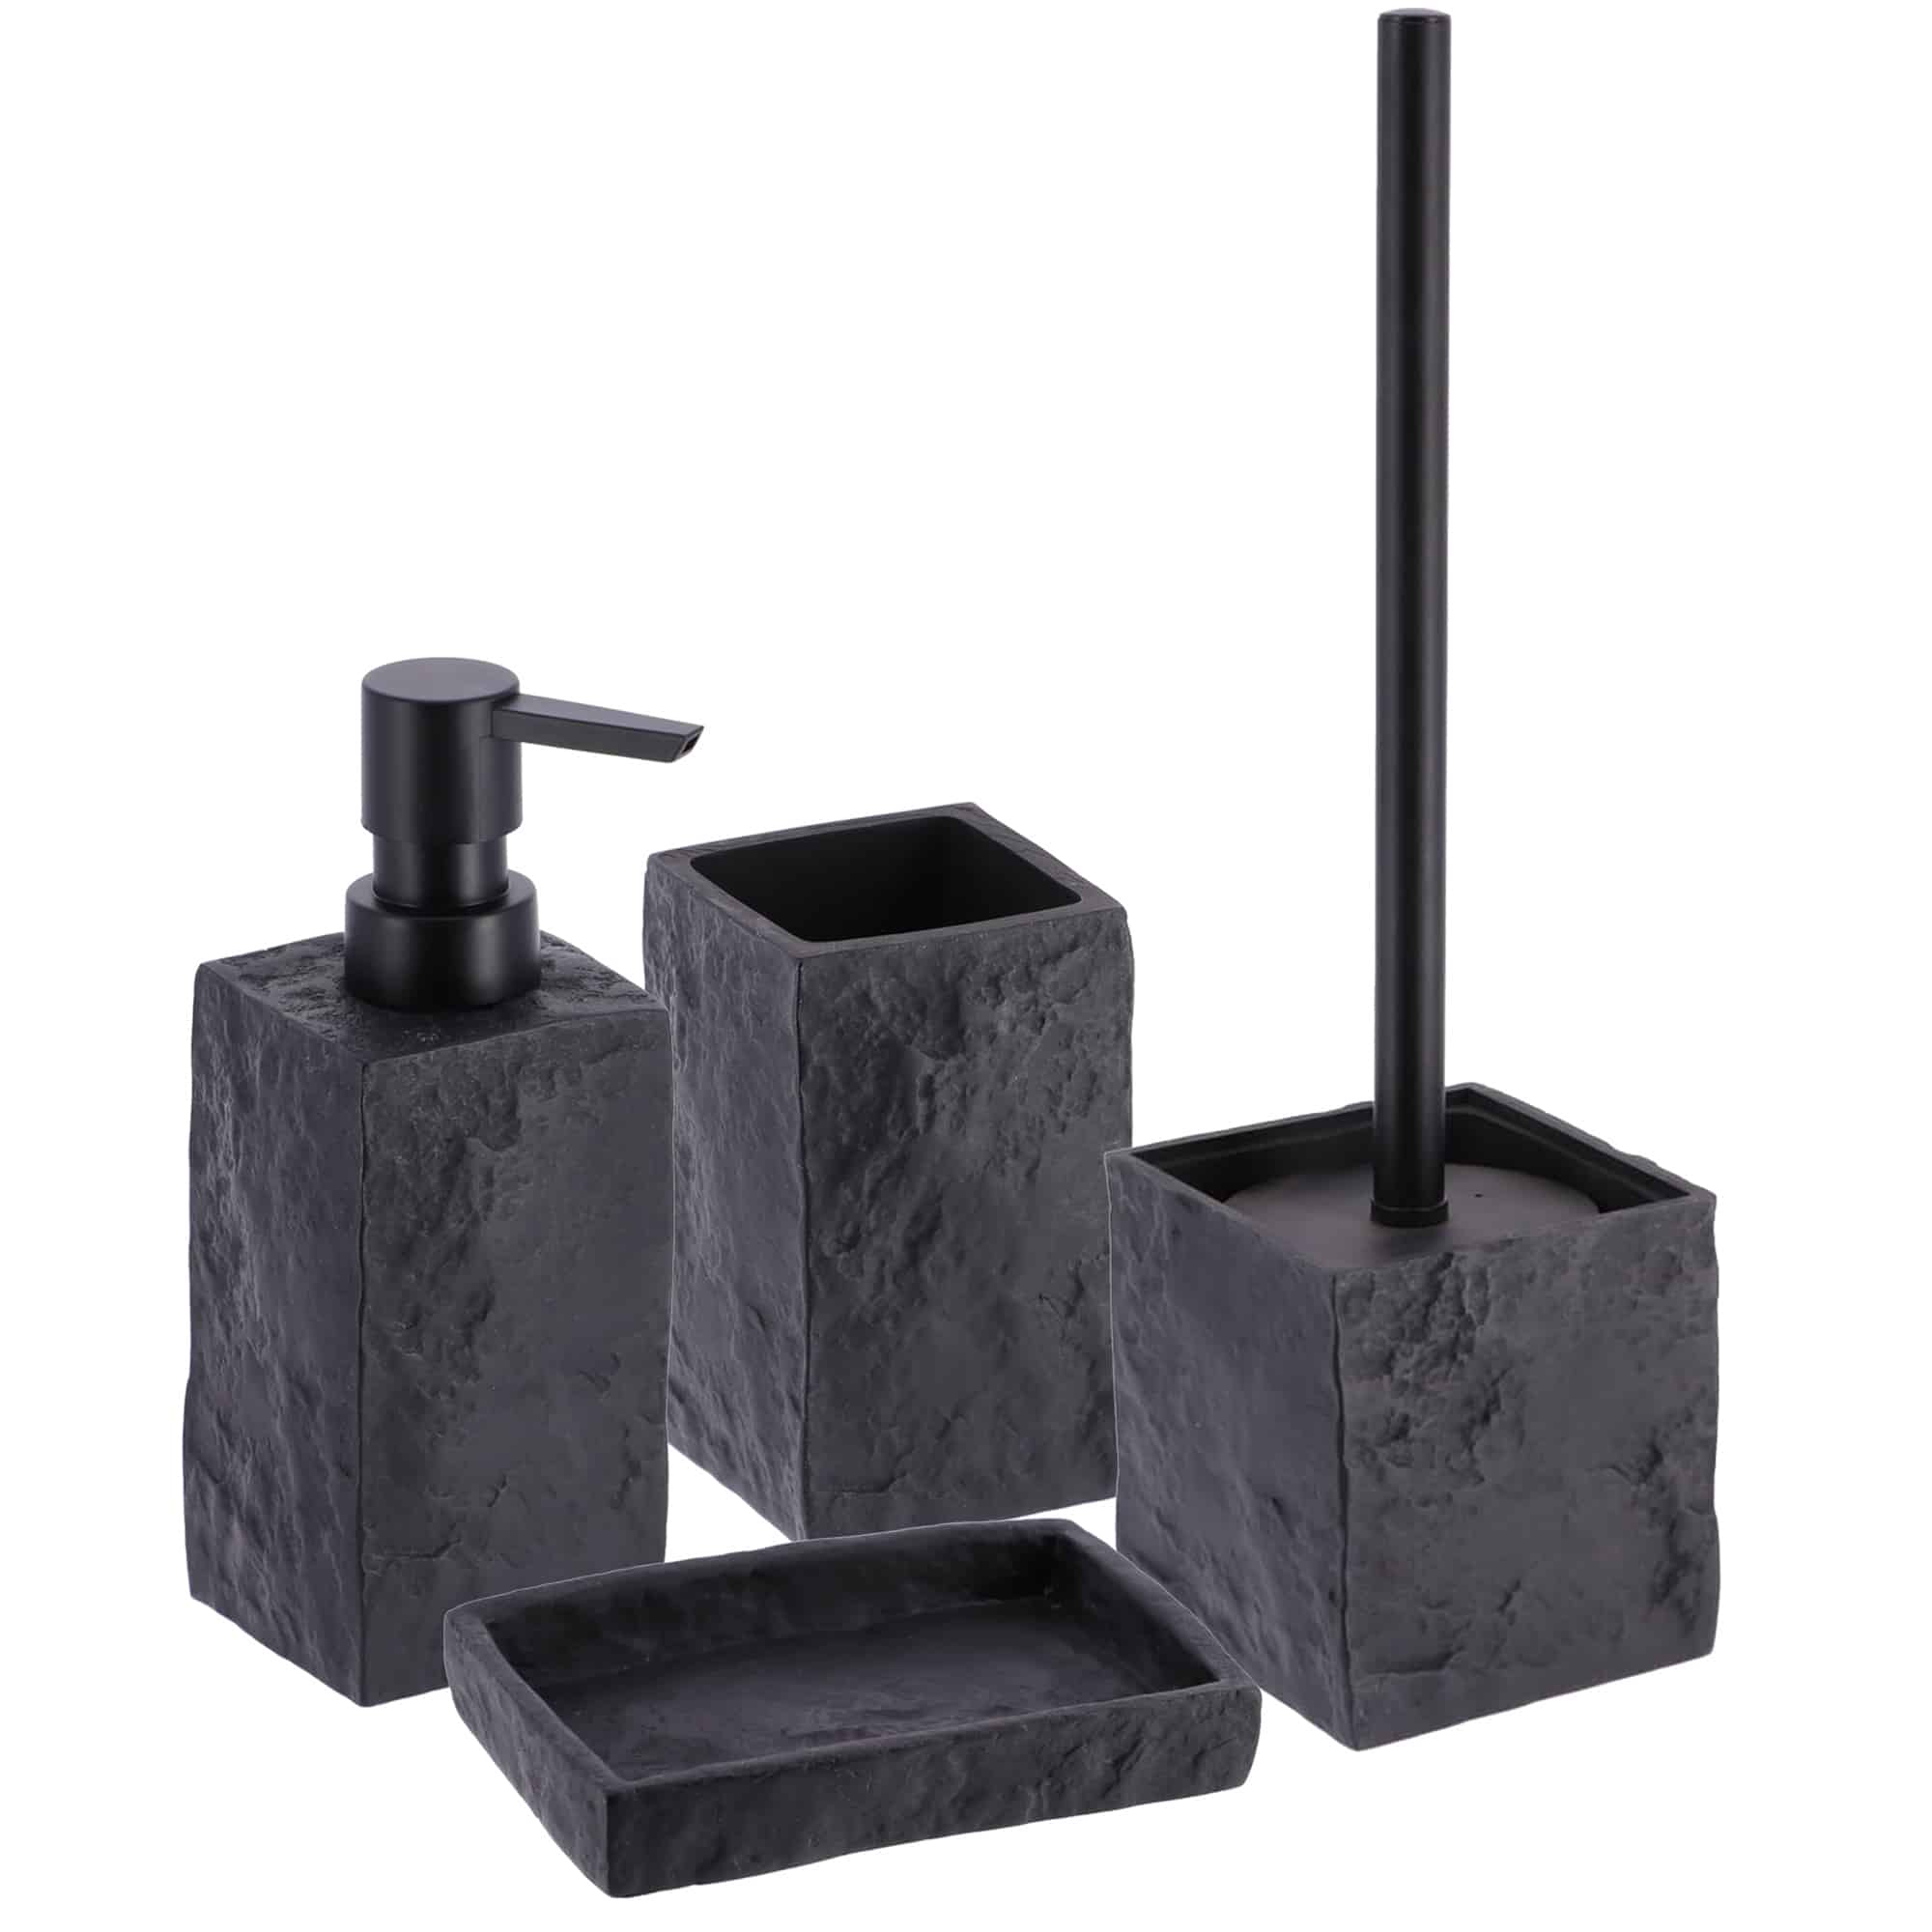 Black Stone Effect Square Toilet Brush and Holder Set